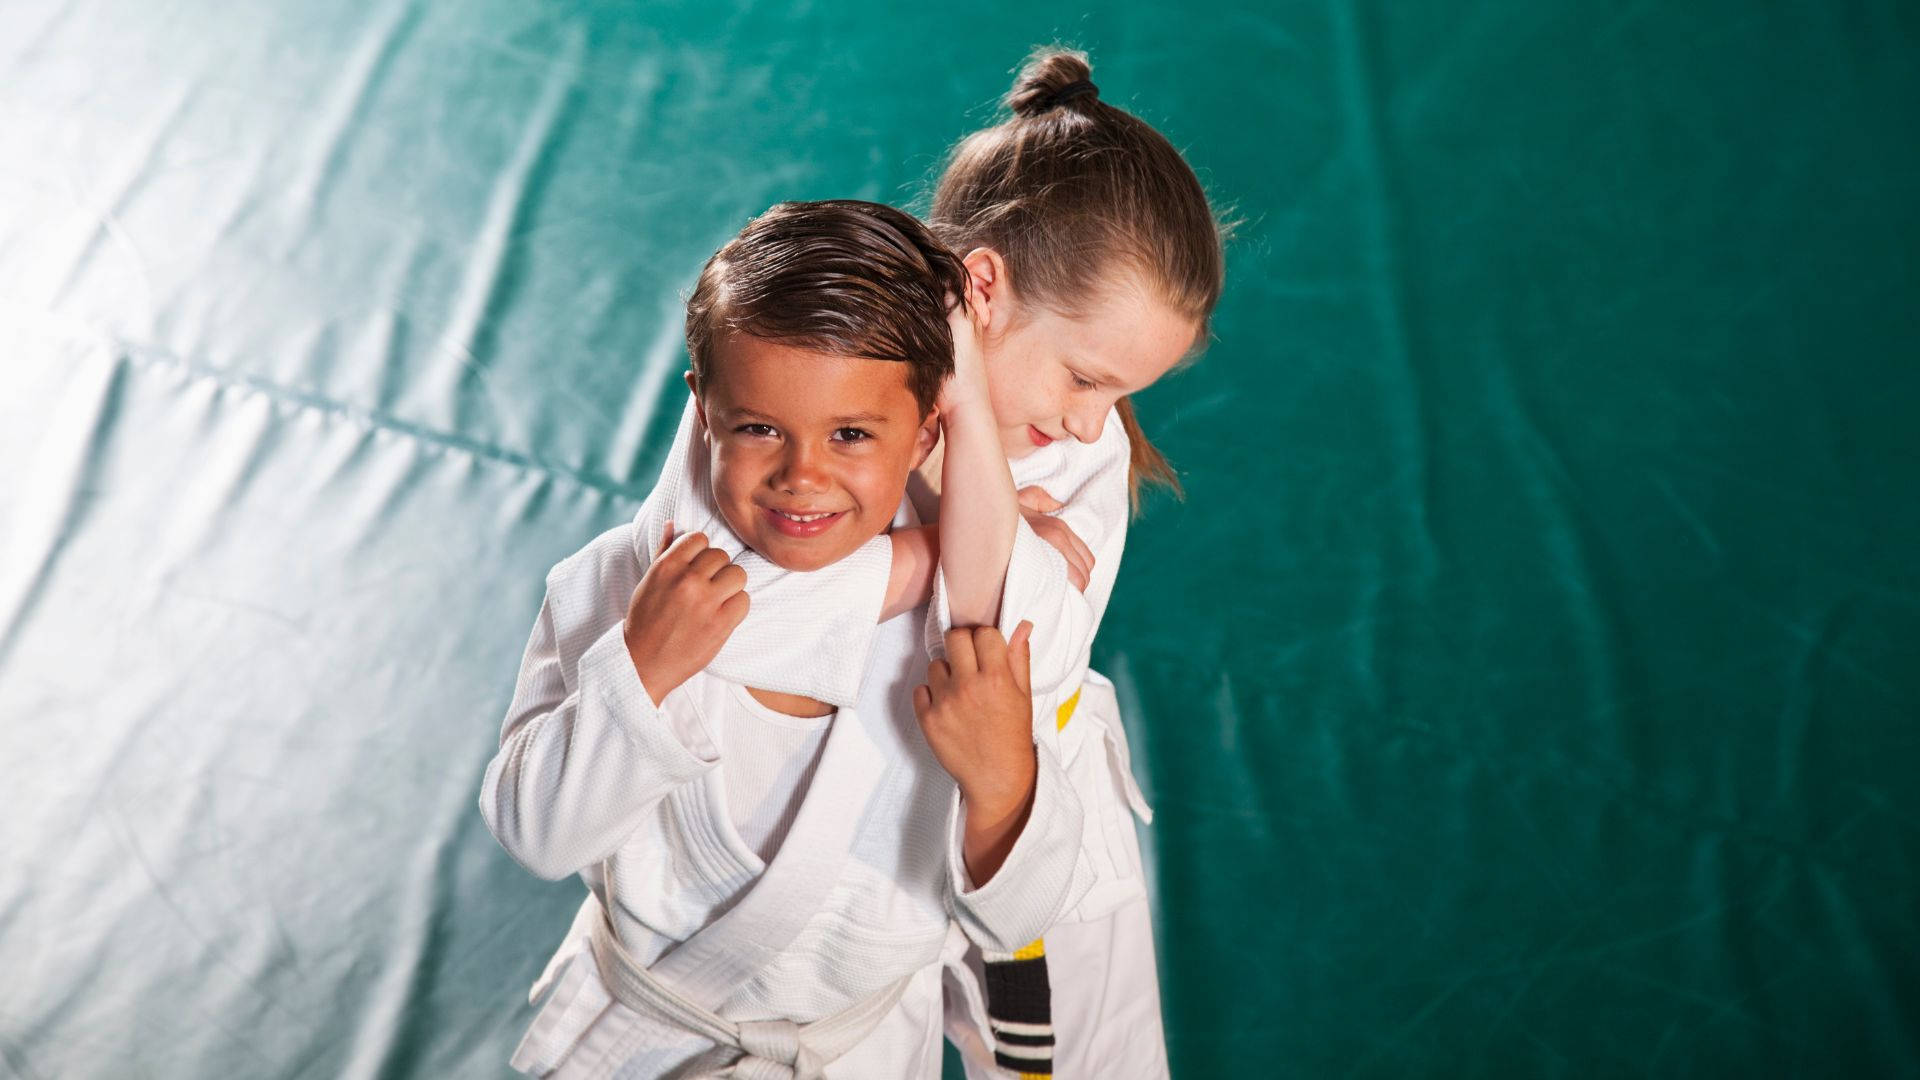 Brazilian Jiu-jitsu Martial Arts Kids Sports Background